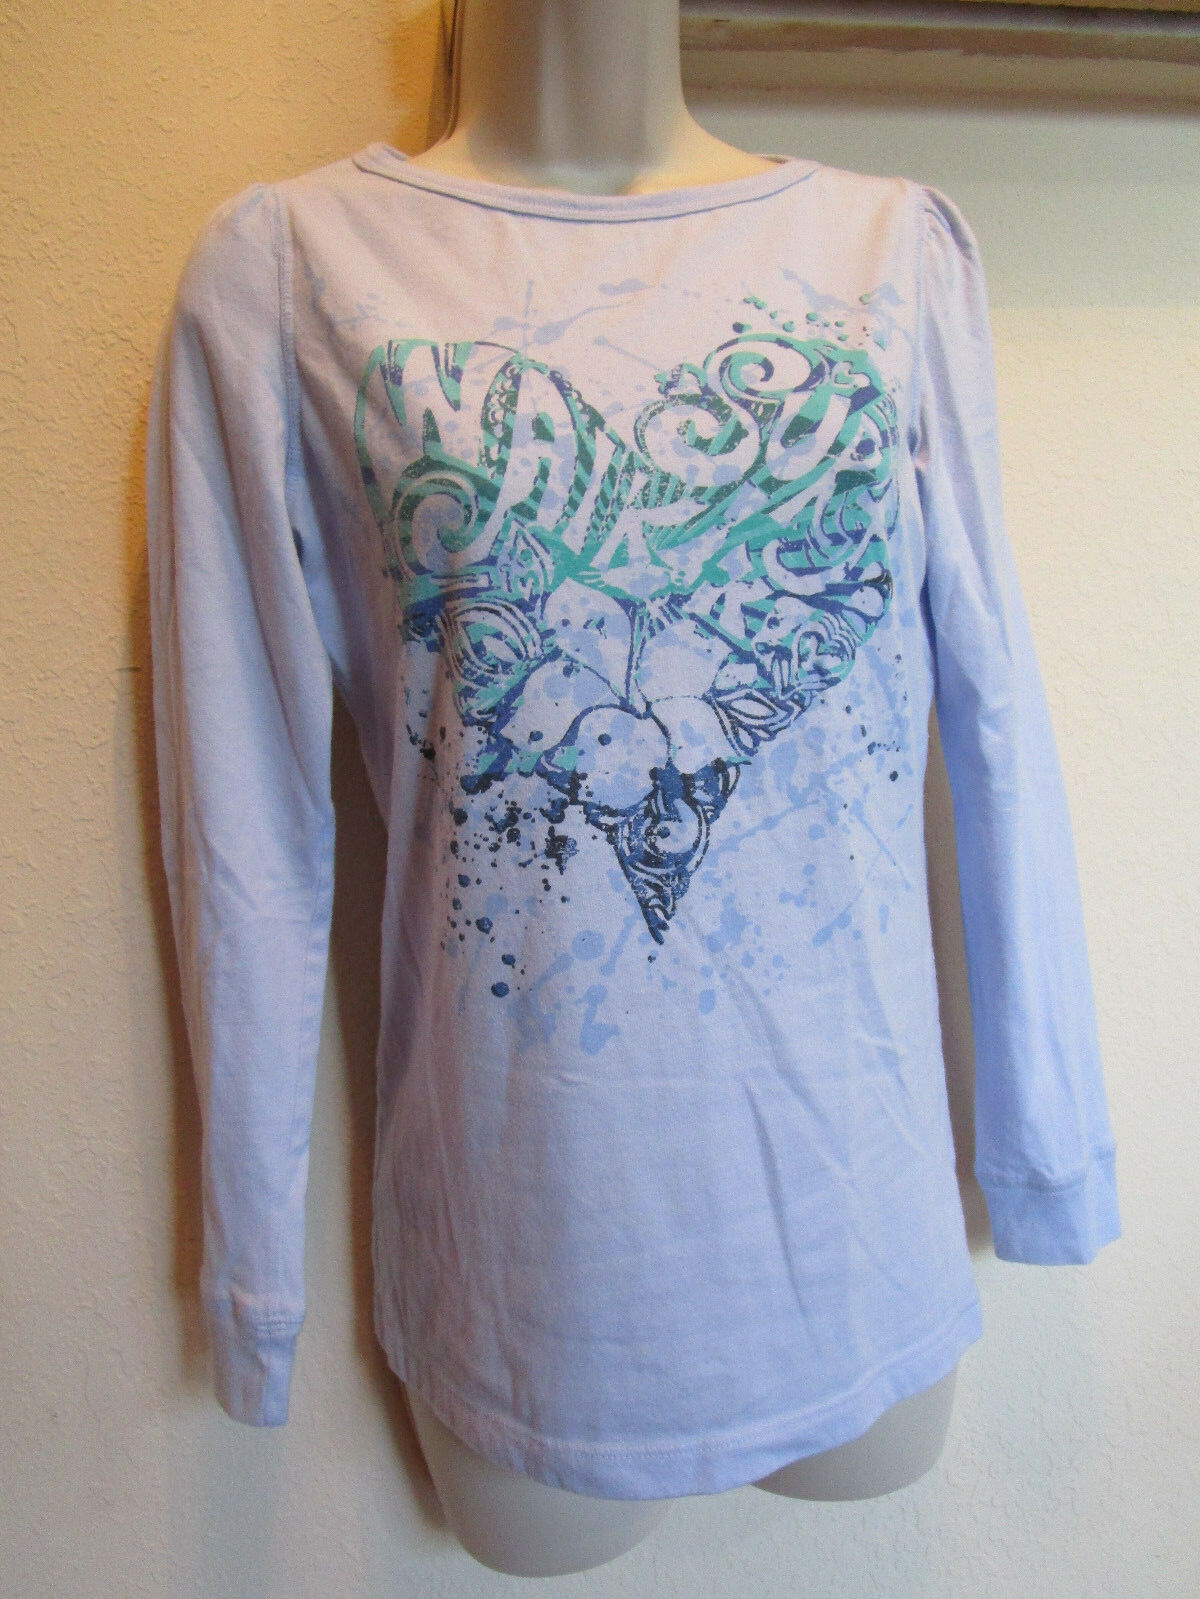 MOSSIMO Long Sleeve GIRLS XLG T Shirt - Waikiki Surf Heart Design, Light Blue - $8.81